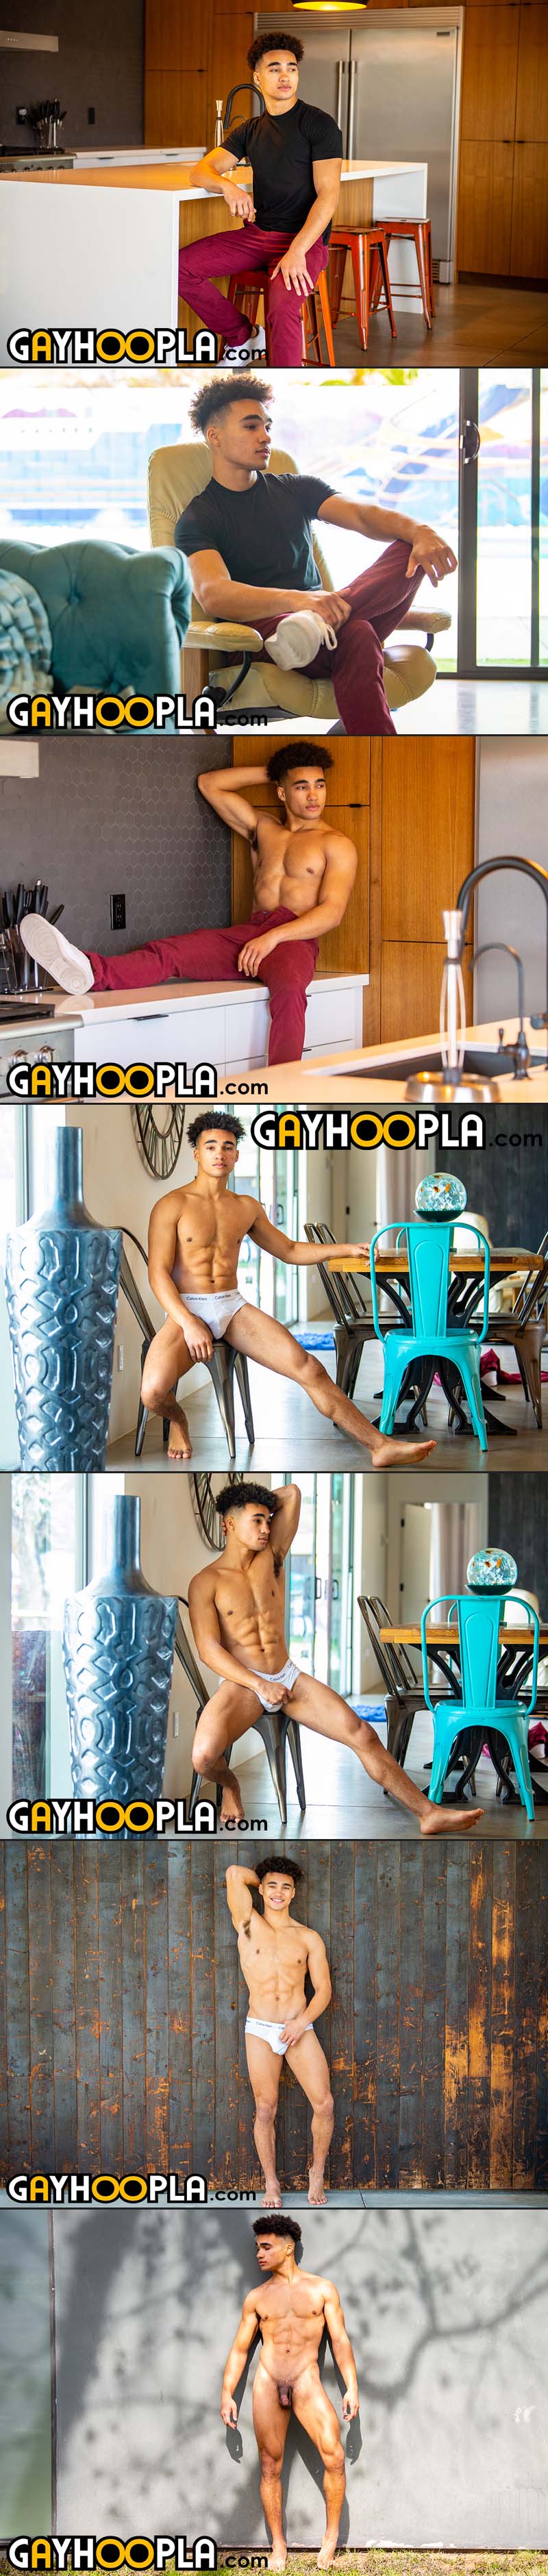 Justin Tyme's Porn Debut at GayHoopla